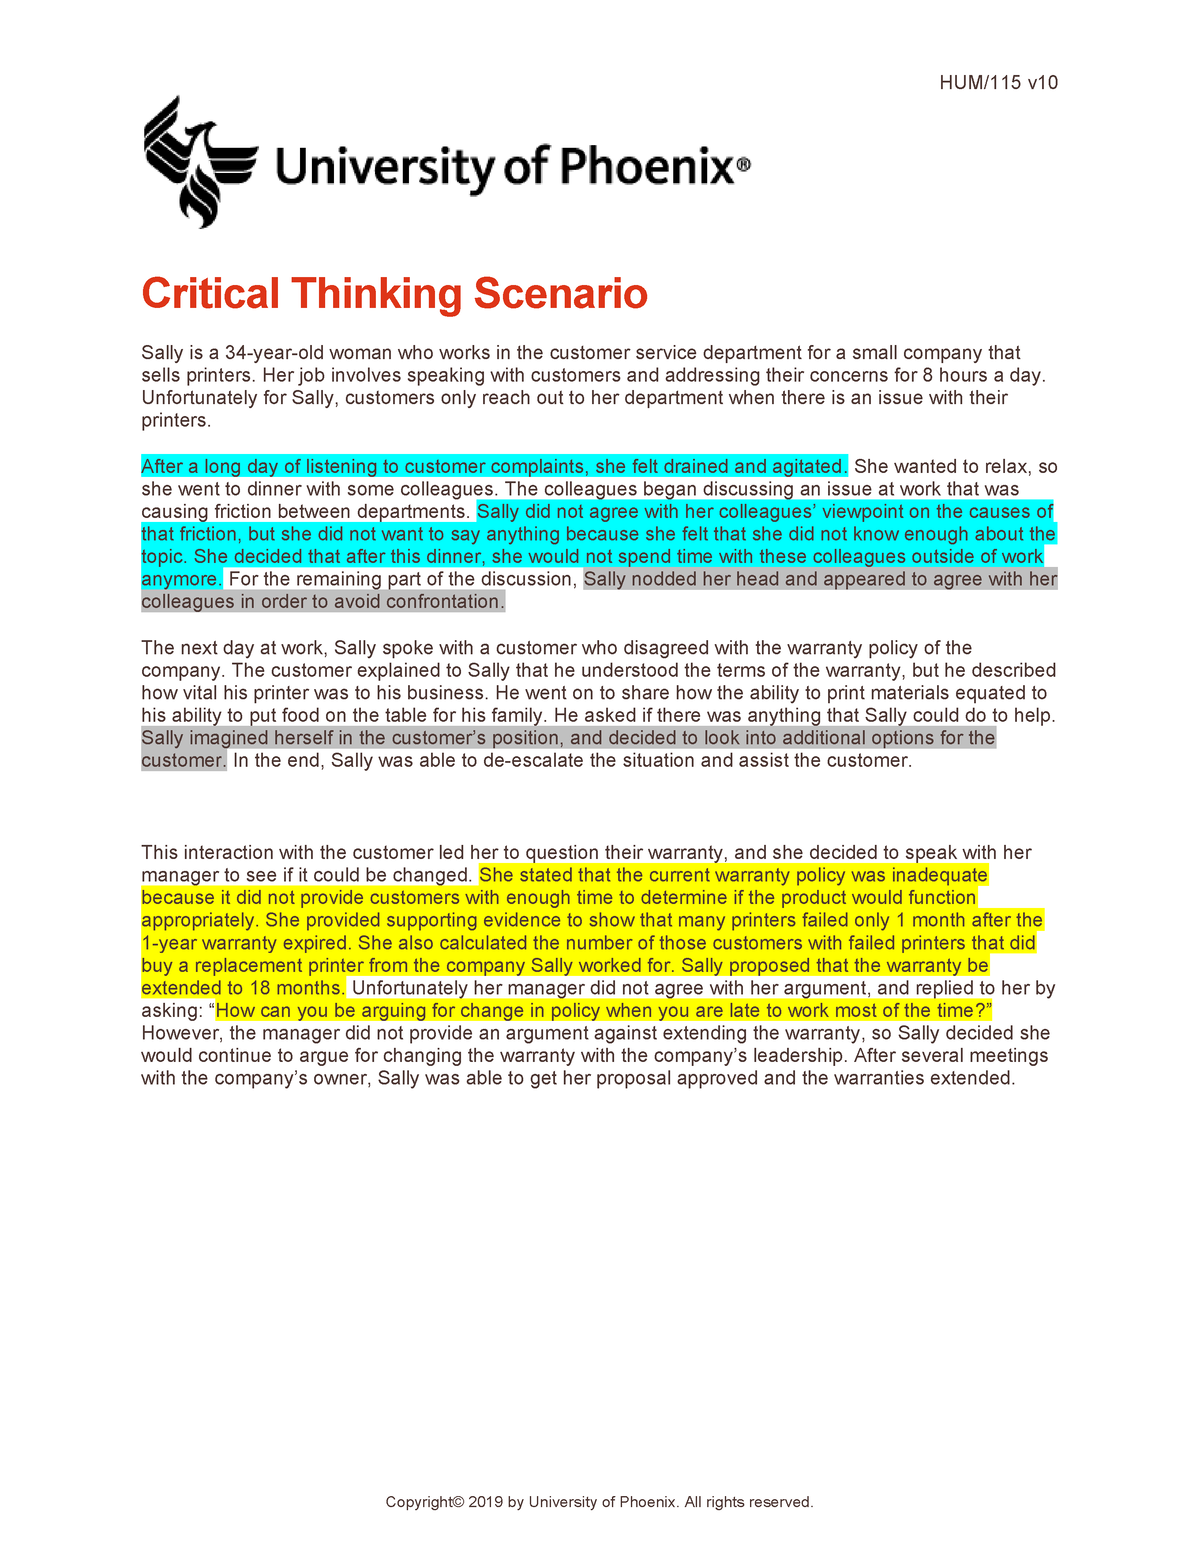 critical thinking scenario university of phoenix